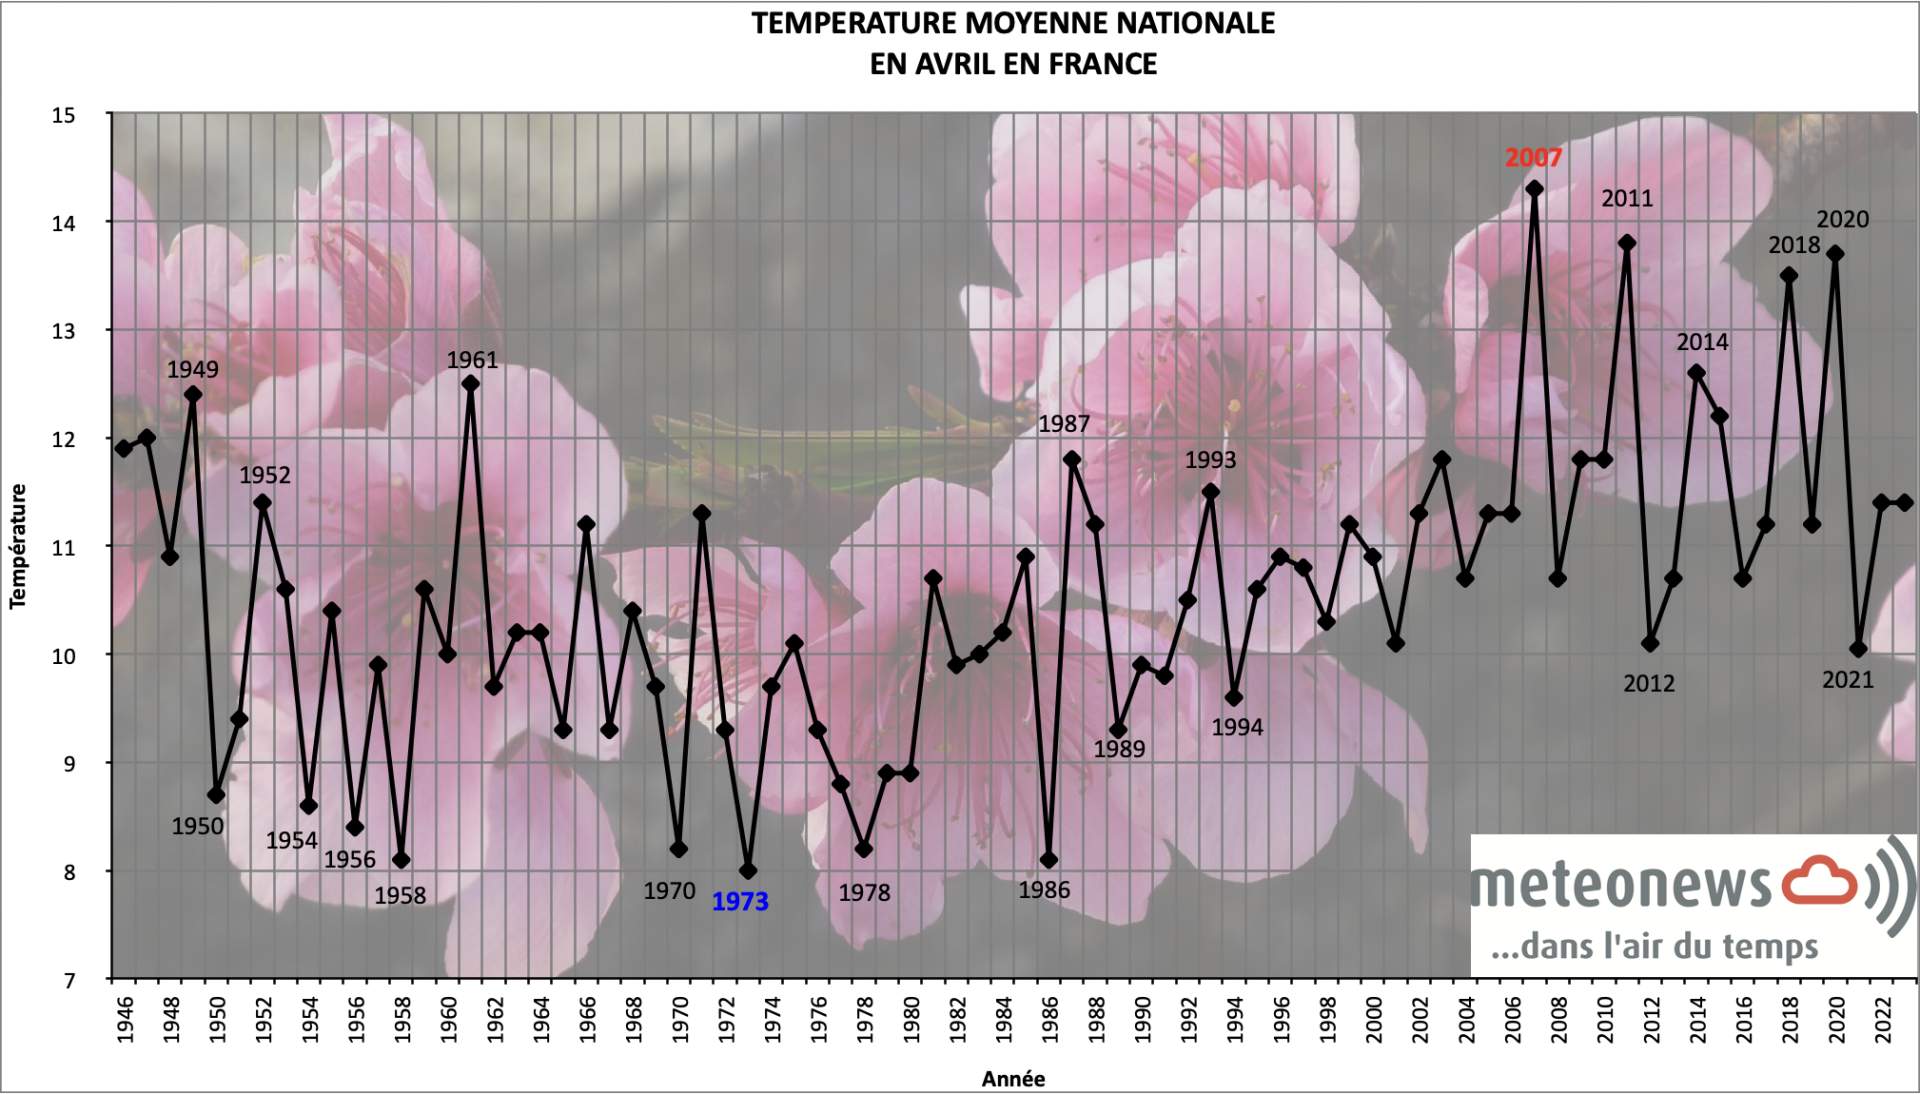 Température moyenne mensuelle en avril en France; Source: MeteoNews